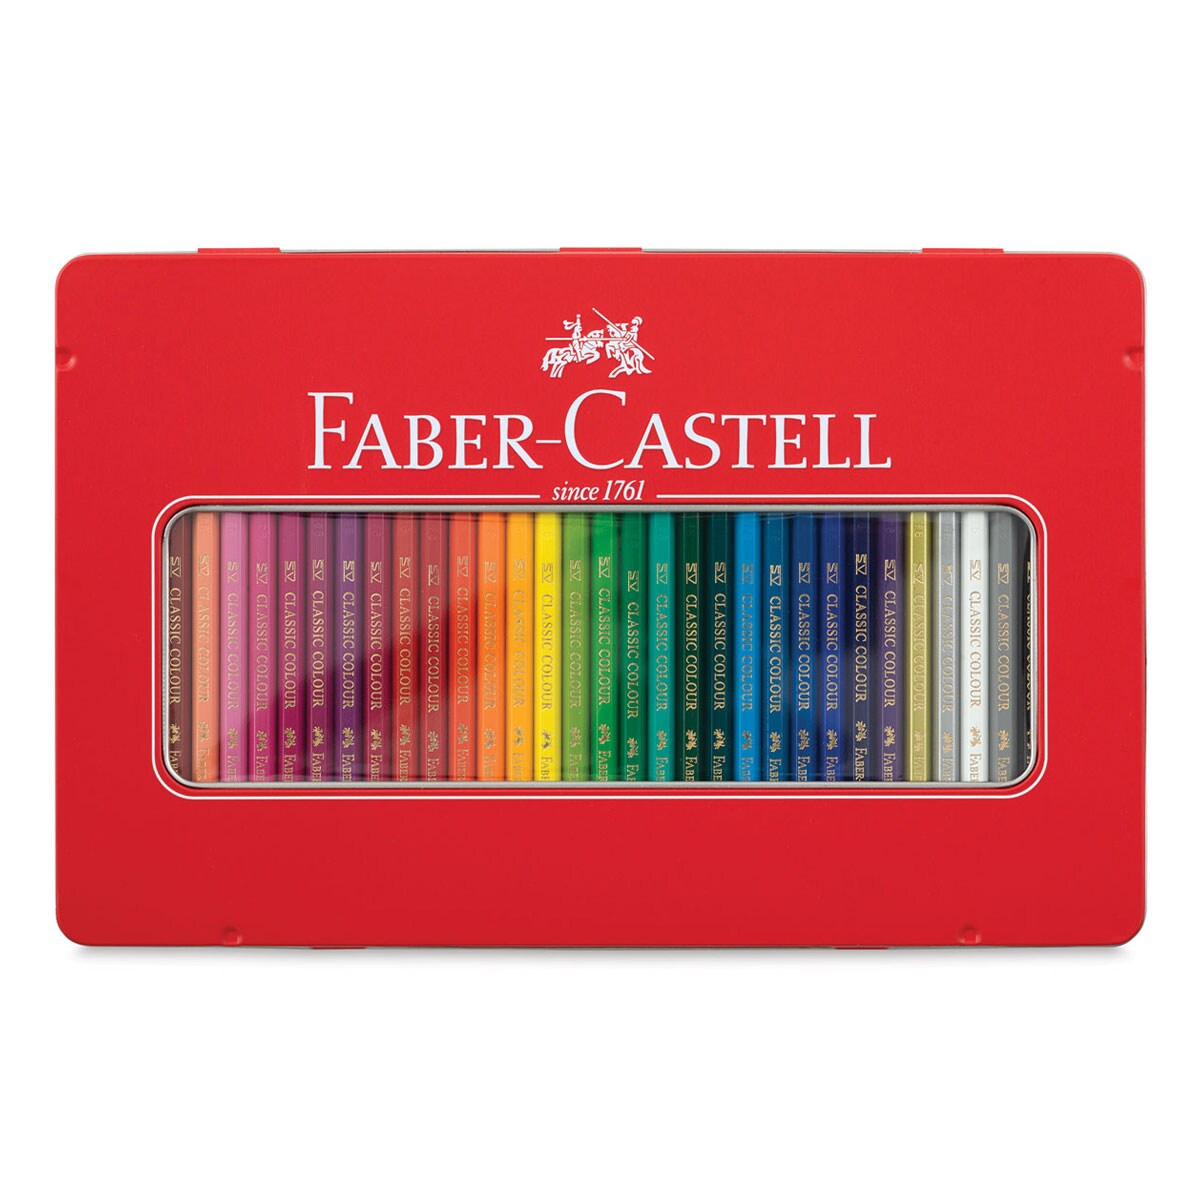 Faber-Castell Polychromos Pencil Set - Assorted Colors, Tin Box, Set of 36